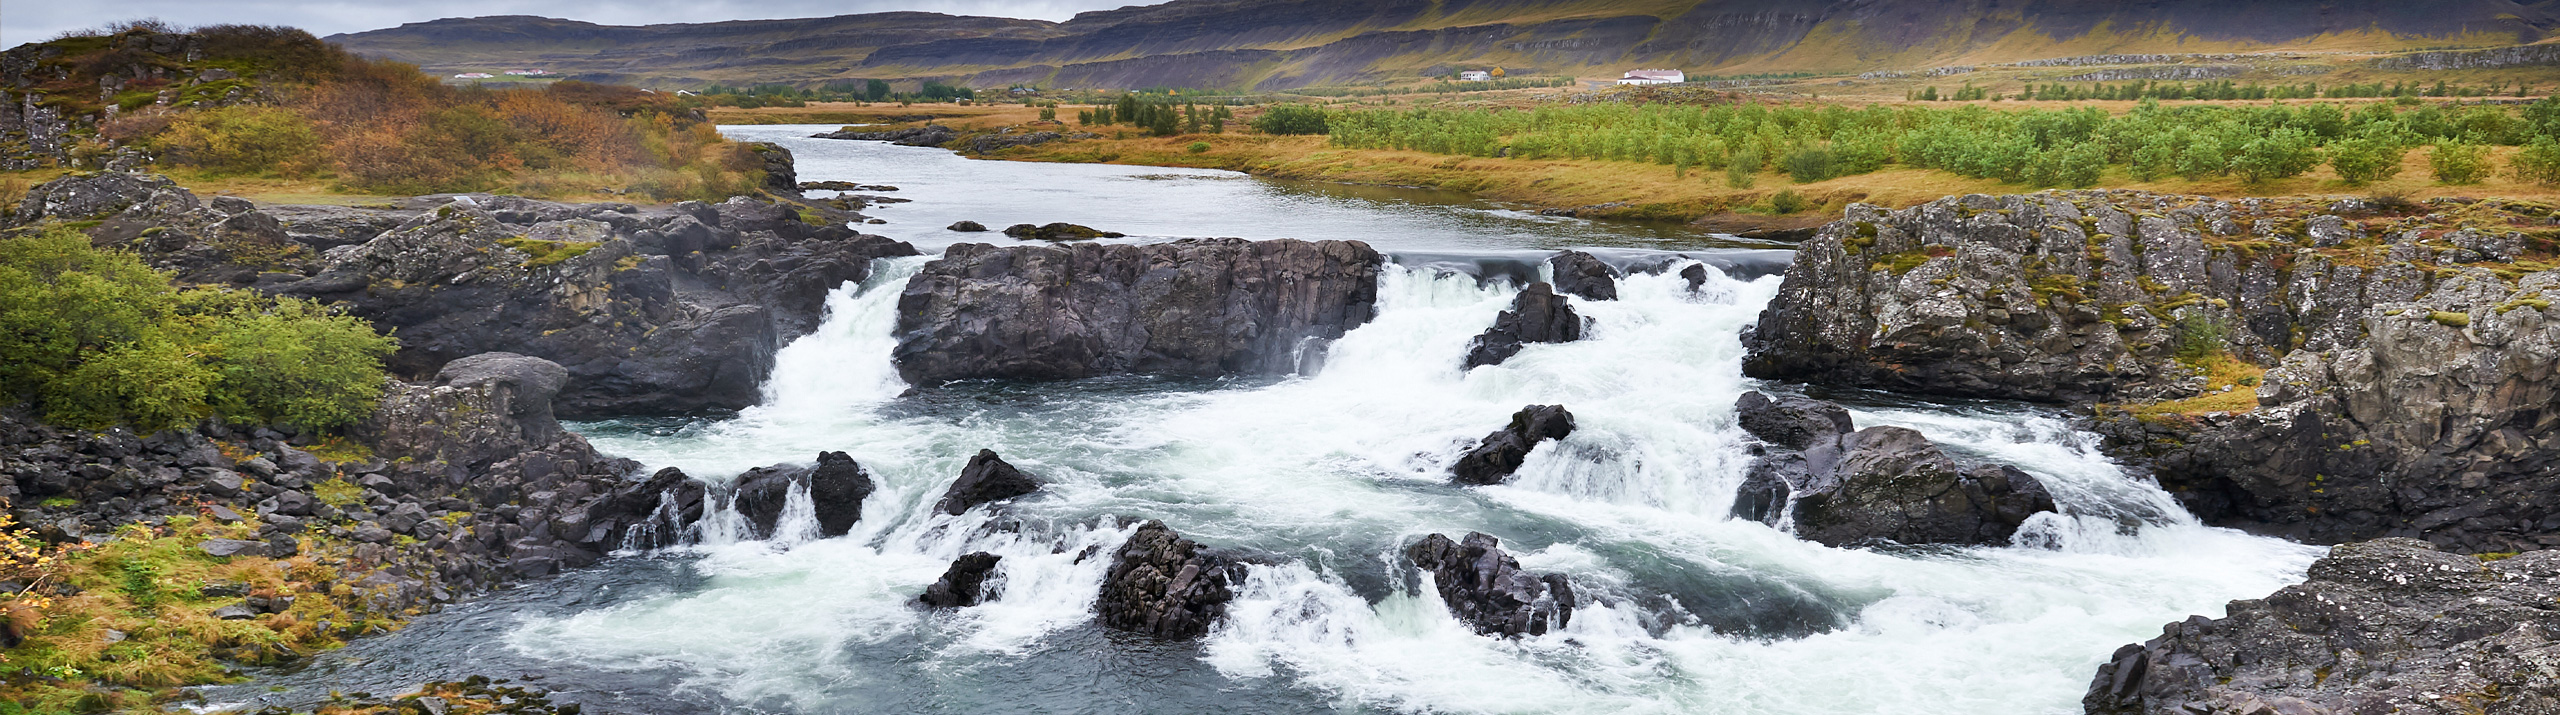 Glanni vandfaldet og vandfald i Island